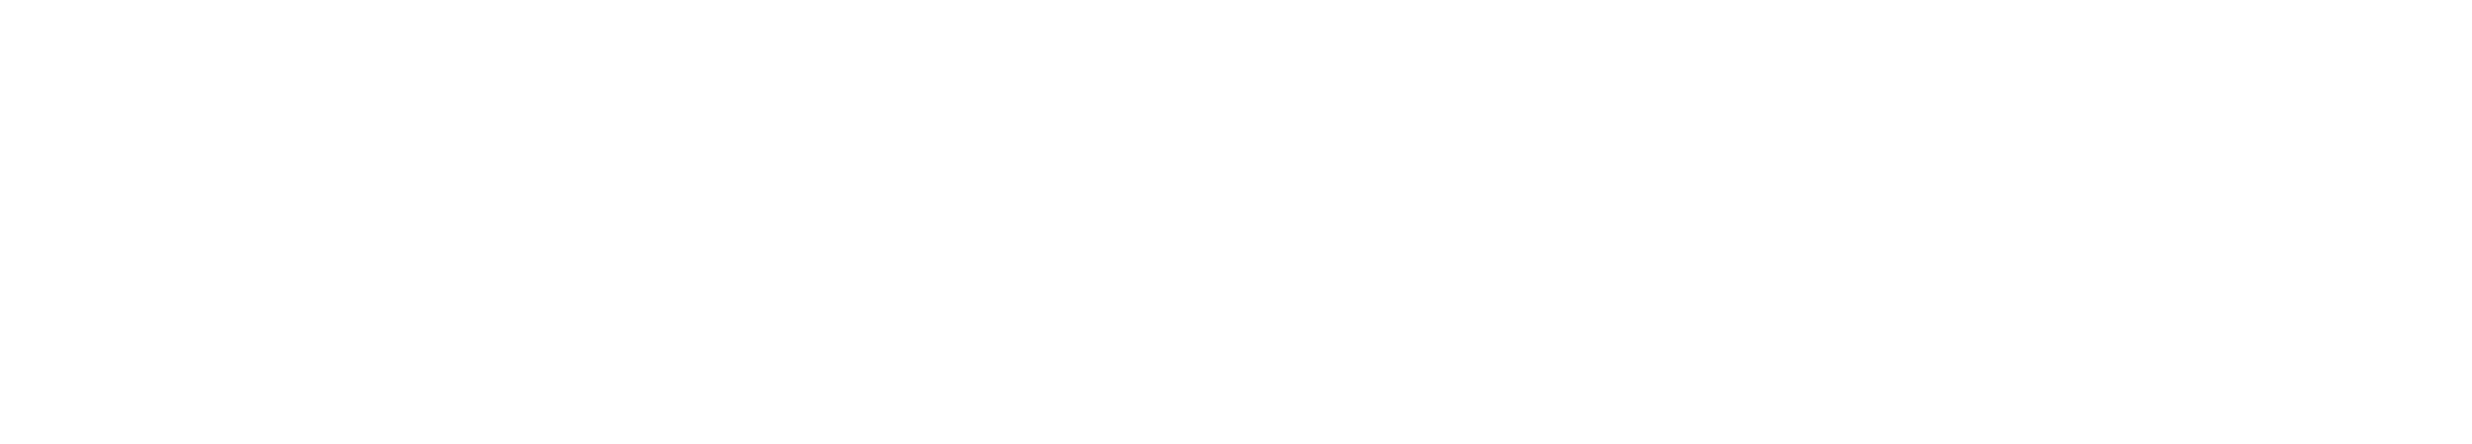 Inxtinct logo white